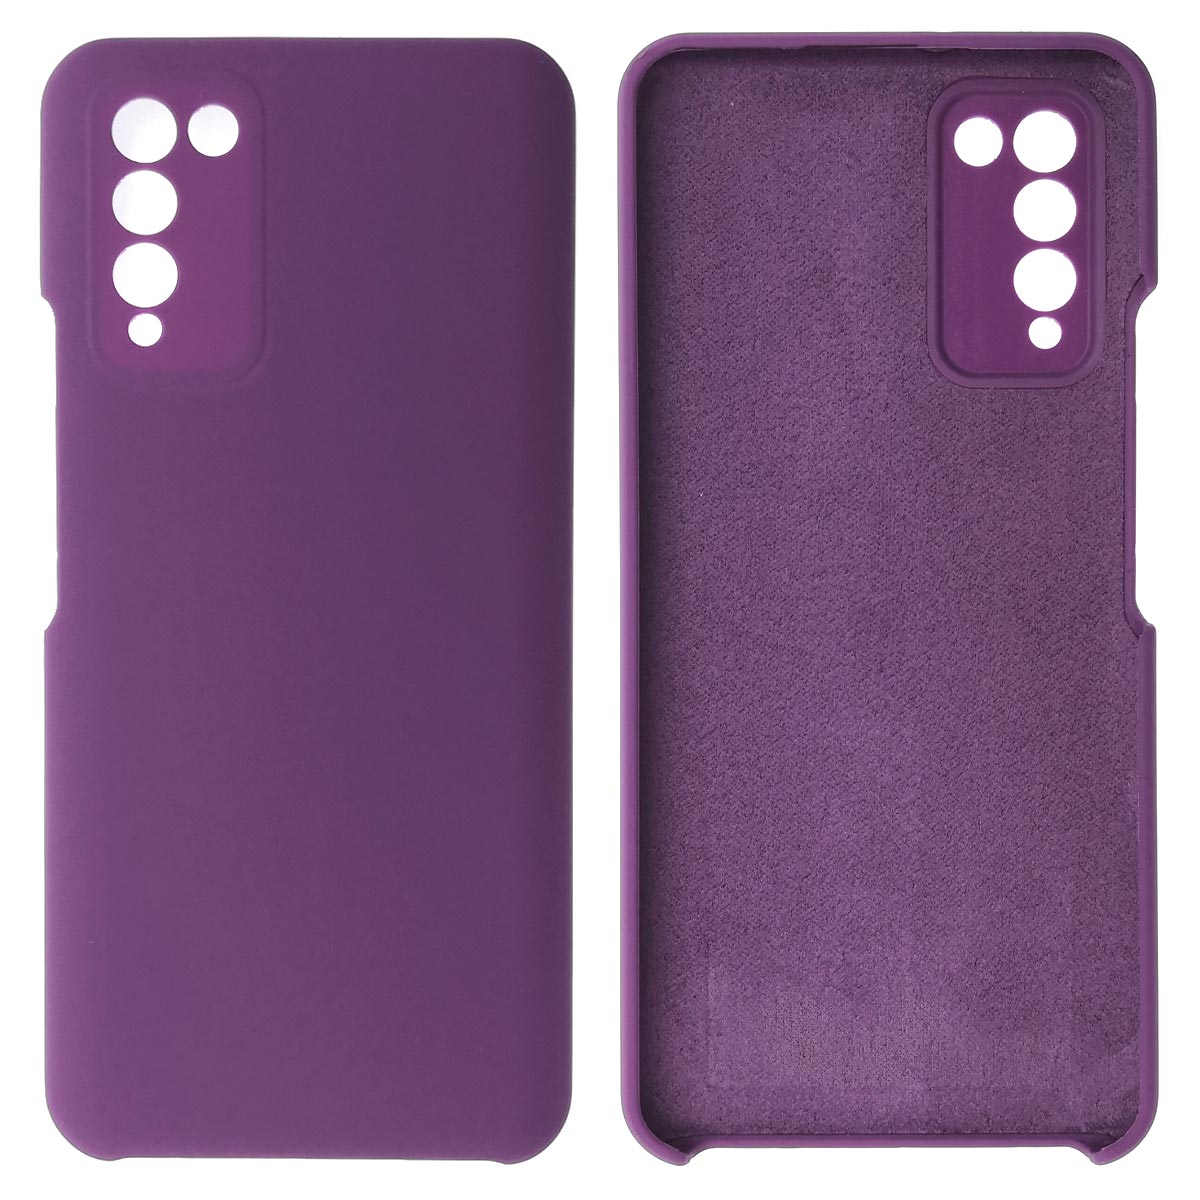 Чехол накладка Silicon Cover для HUAWEI Honor 10X Lite, силикон, бархат, цвет фиолетовый